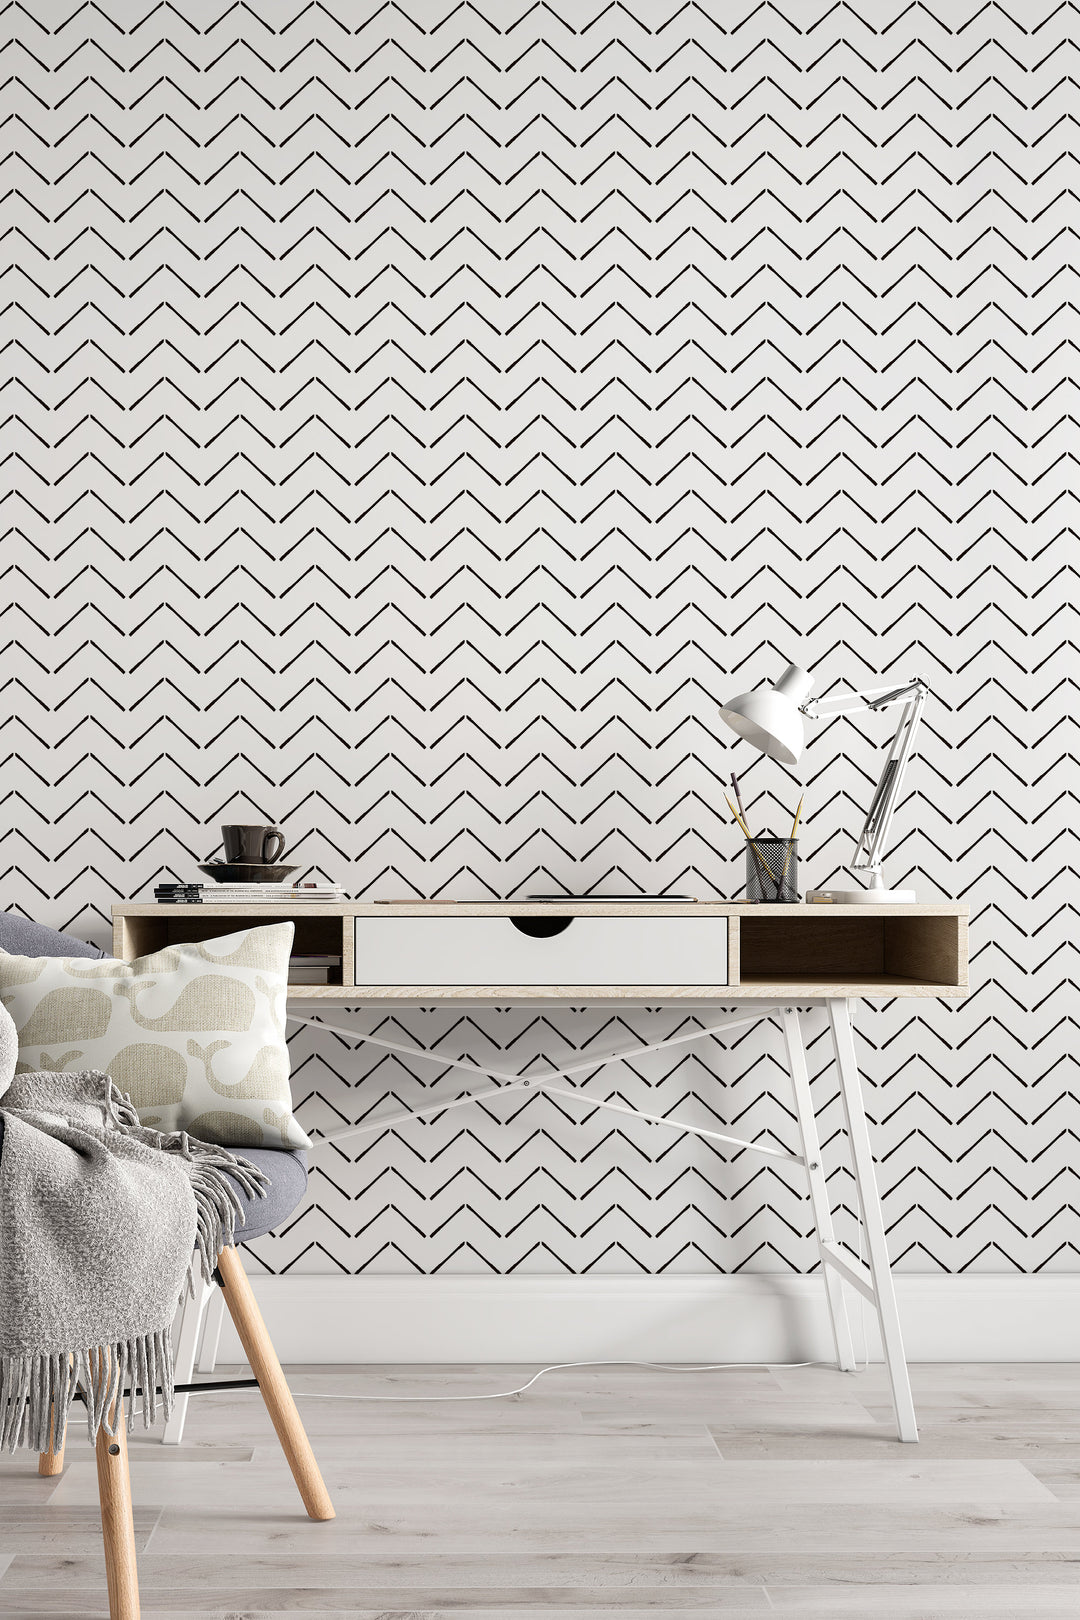 Modern delicate herringbone wallpaper in black and white chevron, Scandinavian design, removable self adhesive & pre-pasted material 3148